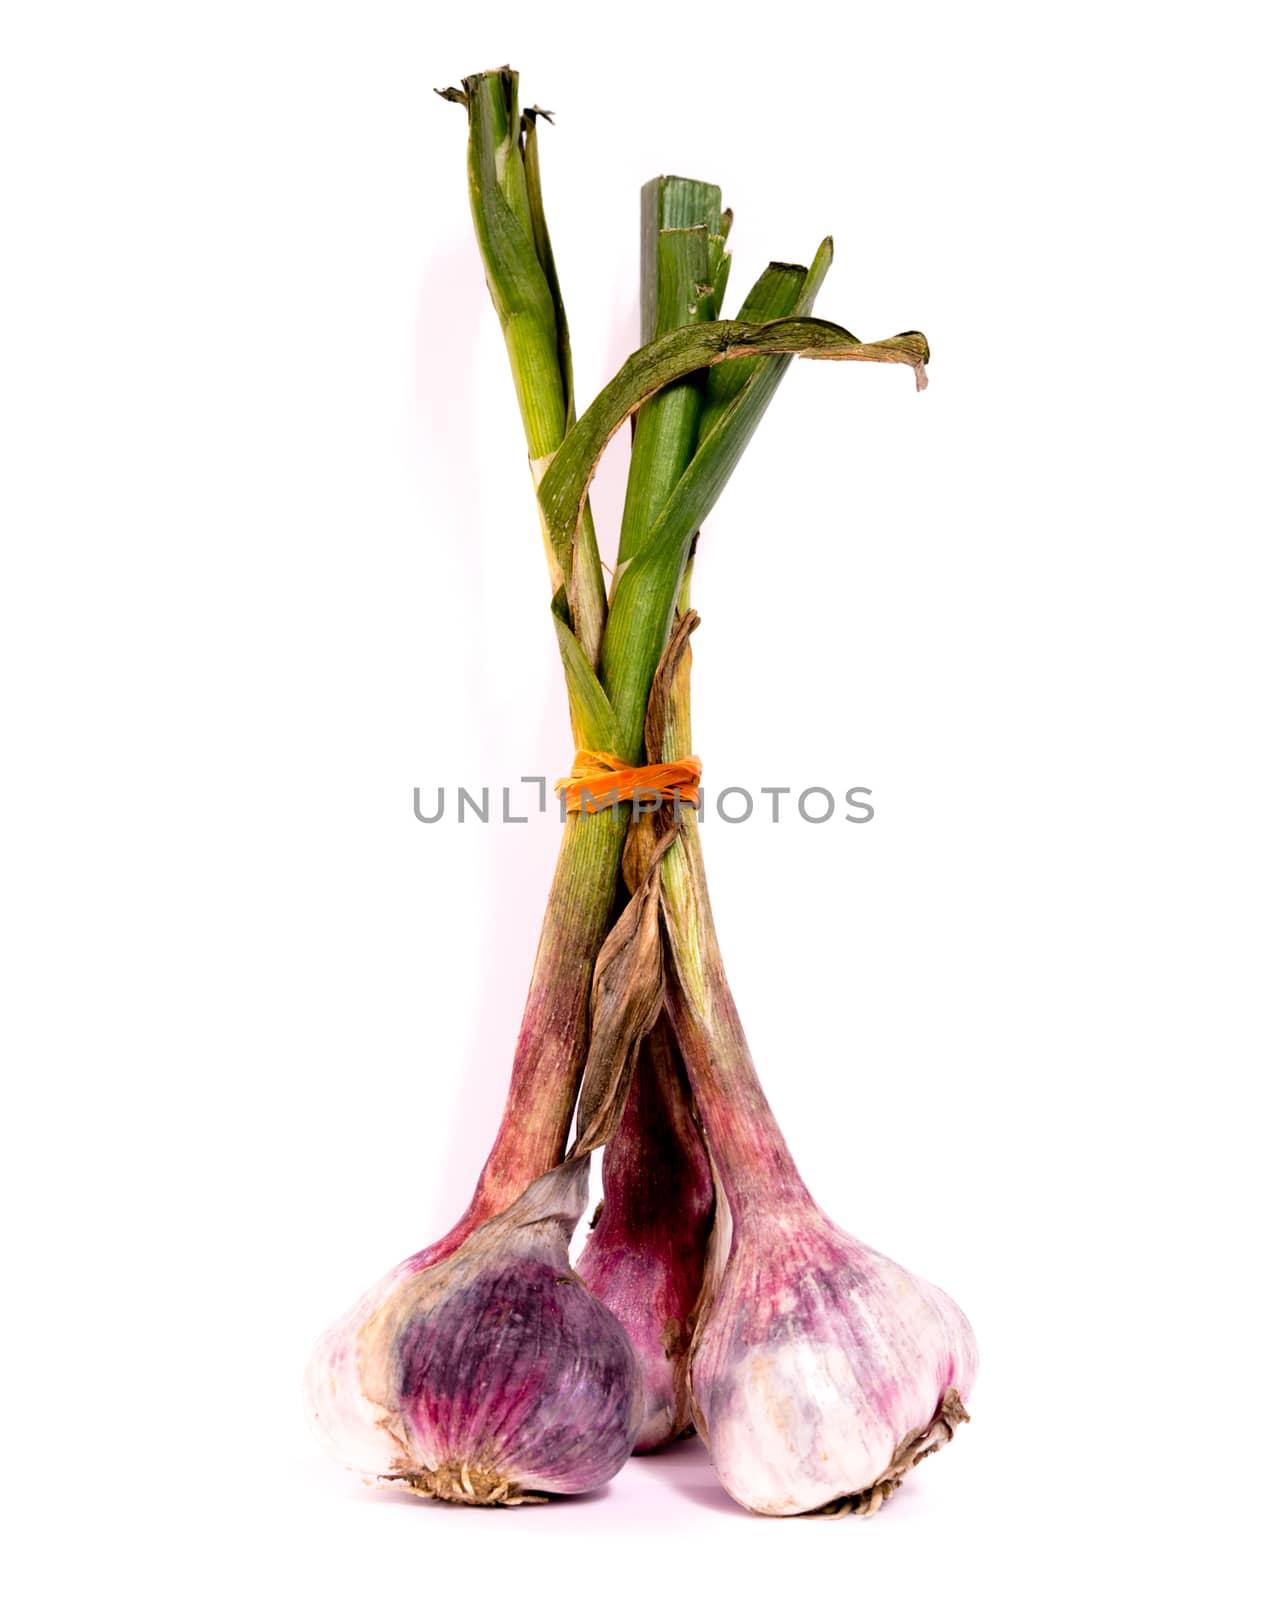 Fresh organic garlic bulbs by trongnguyen